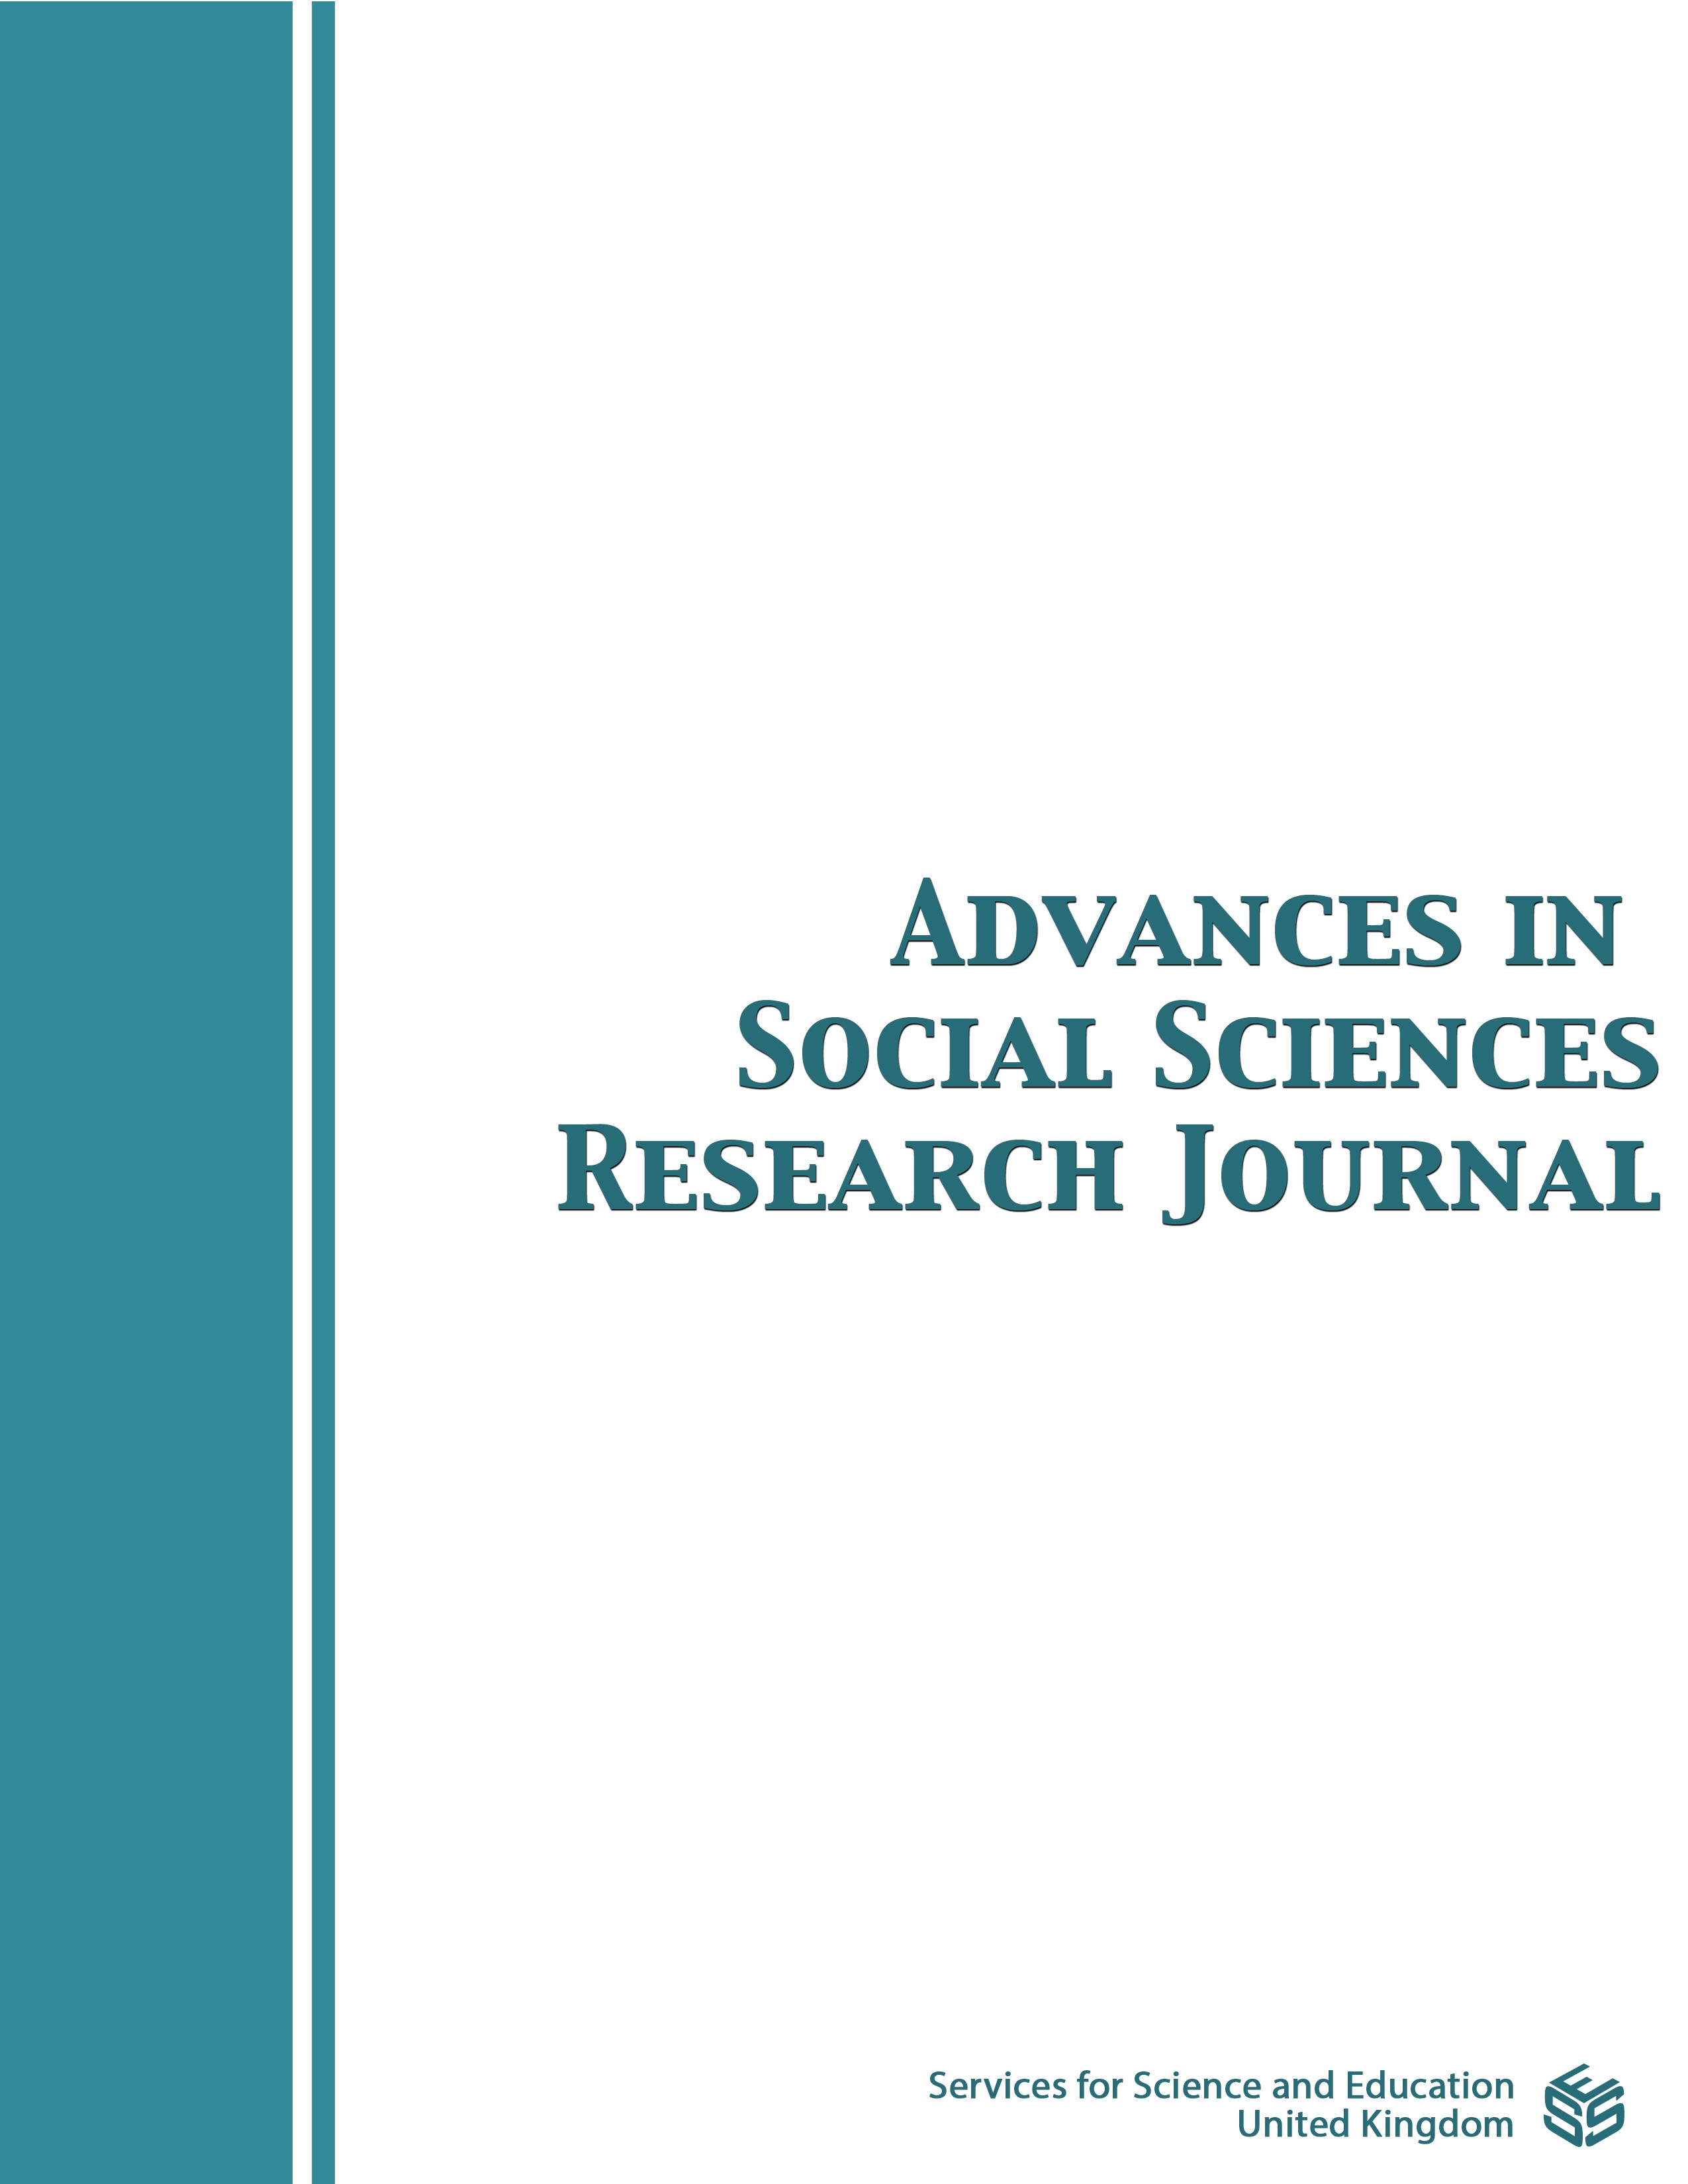 					View Vol. 8 No. 12 (2021): Advances in Social Sciences Research Journal 
				